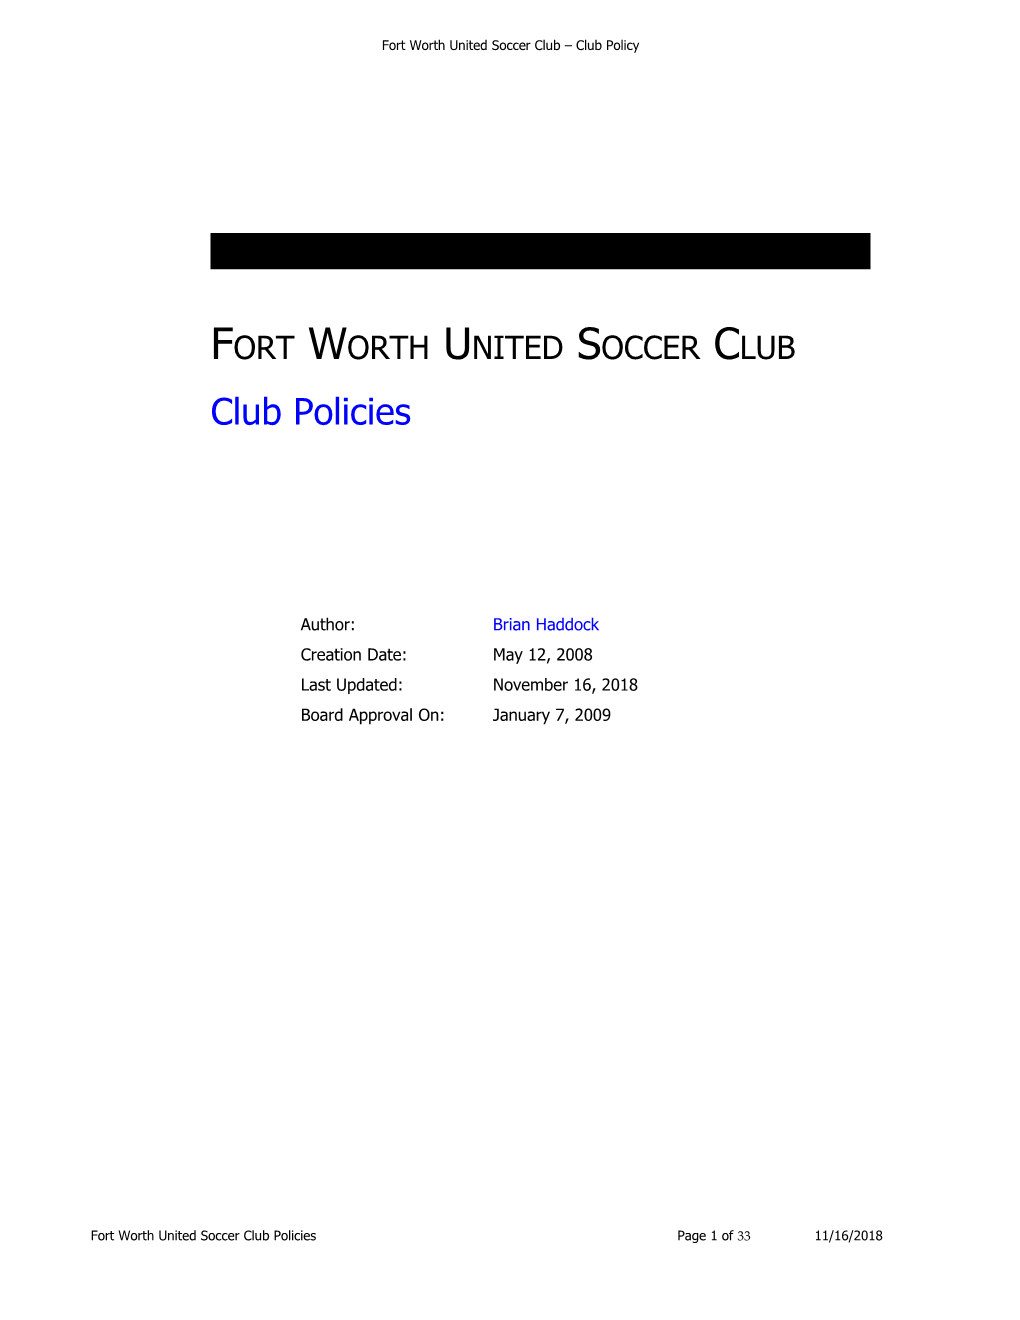 Fort Worth United Soccer Club - Policies